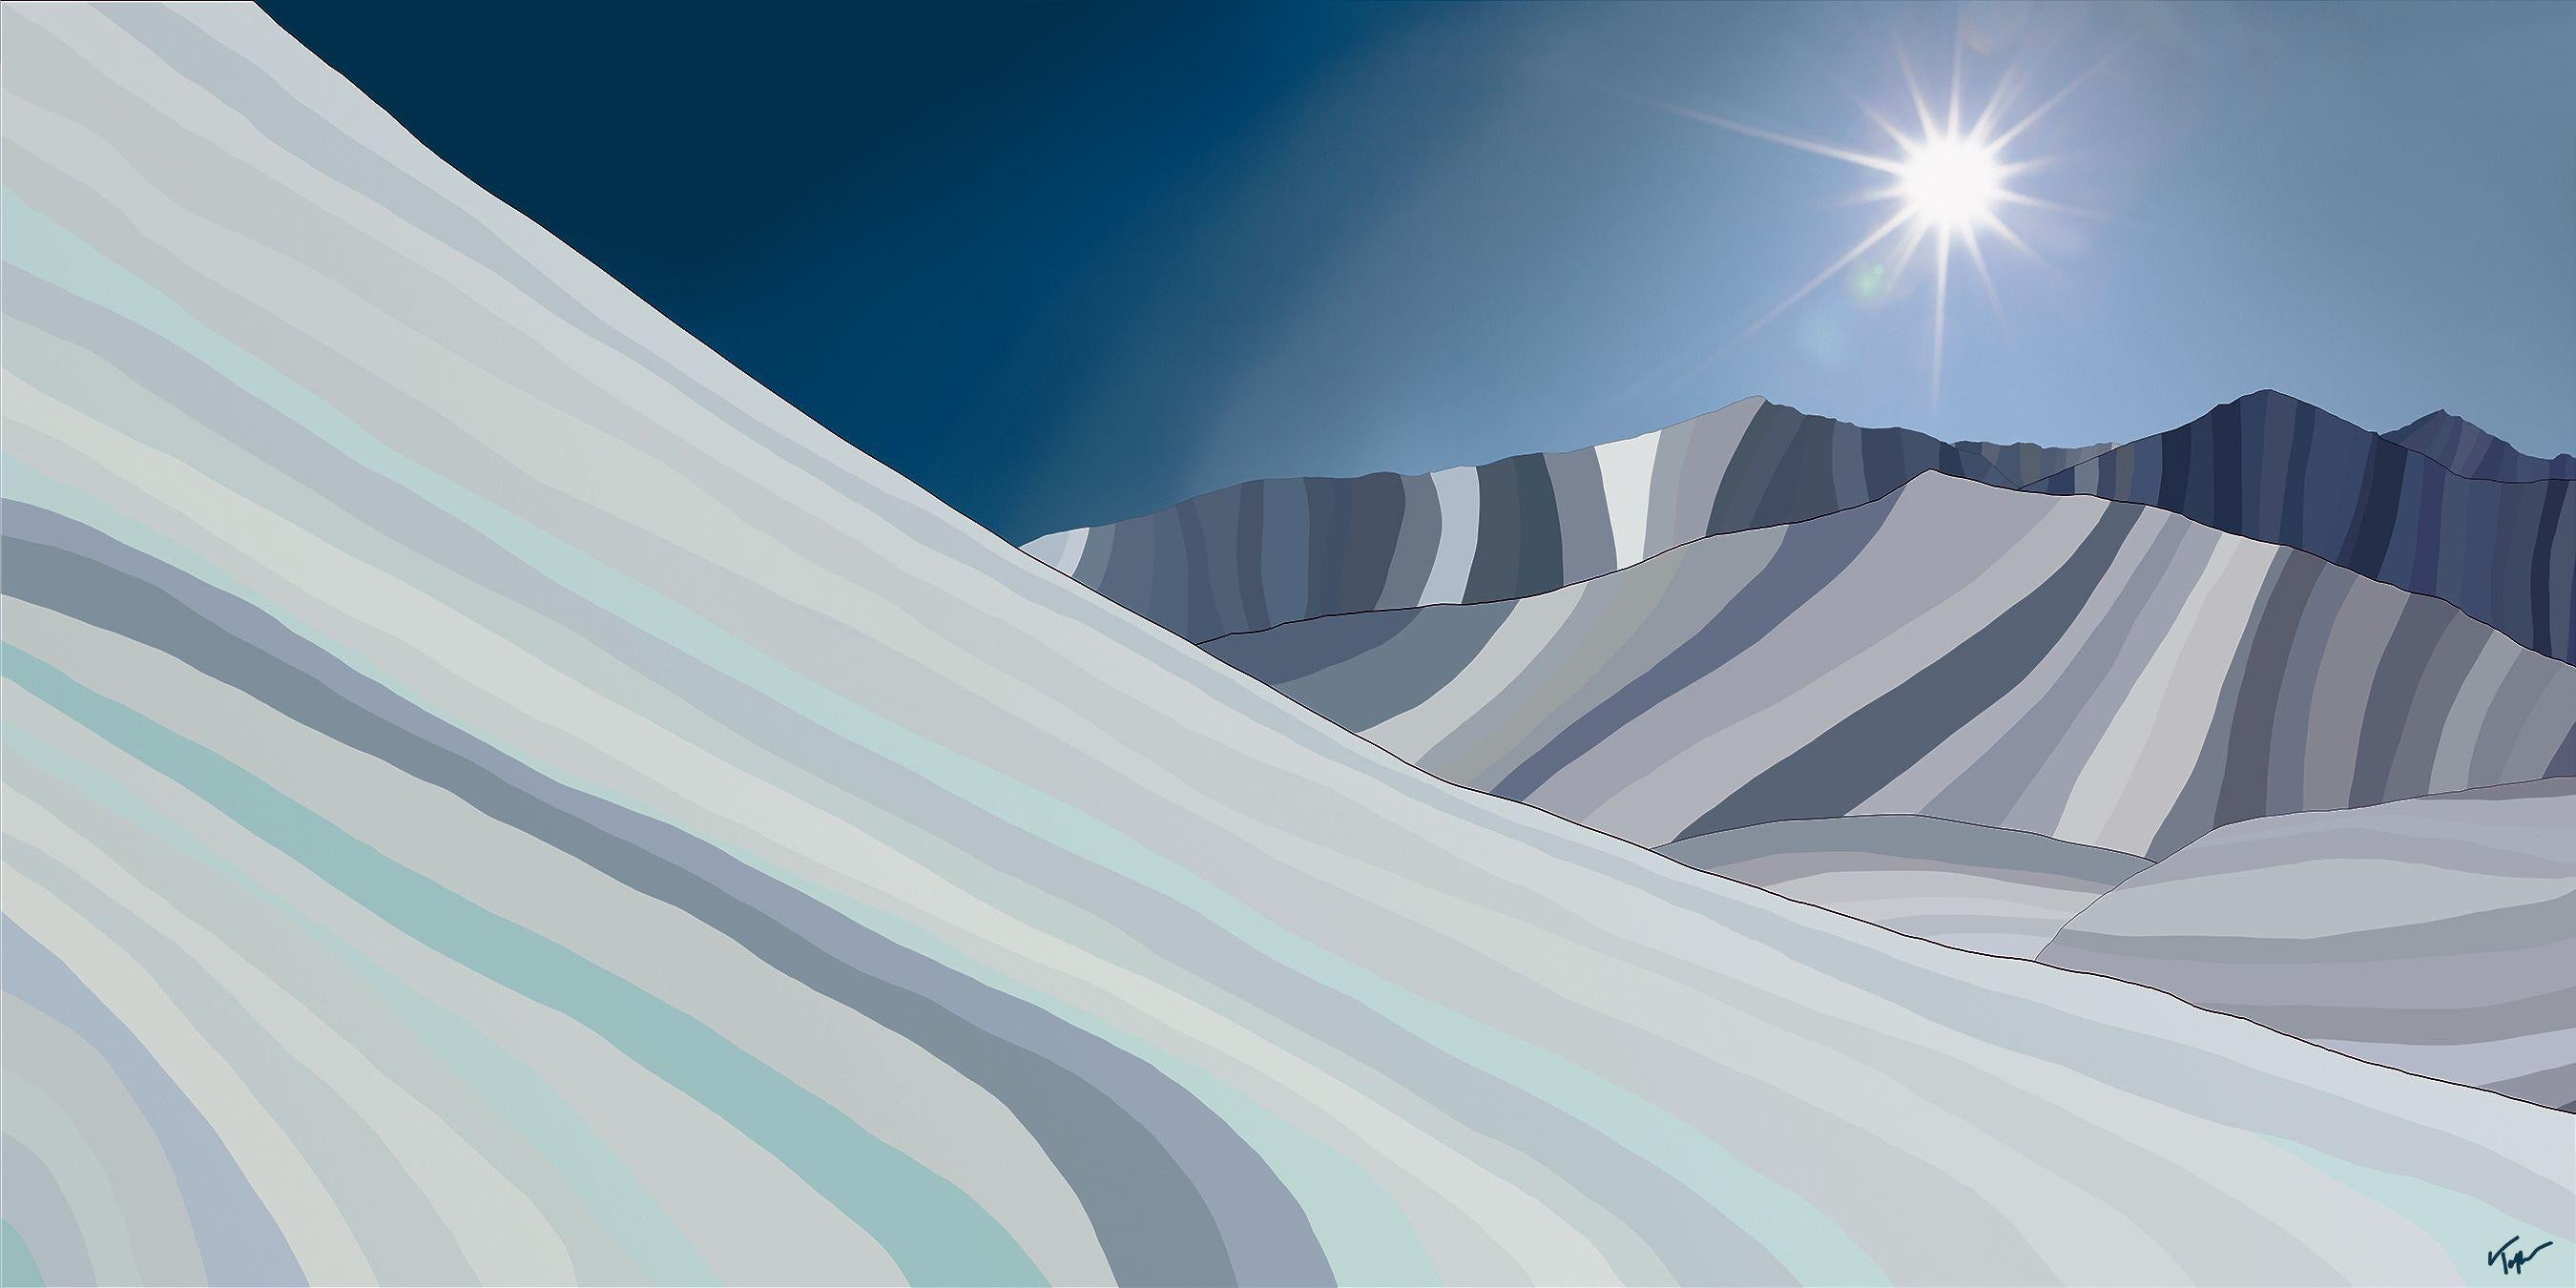 Abstract Painting Topher Straus - Peaks, peinture de paysage impressionniste moderne abstraite, Ski & Snow, édition limitée